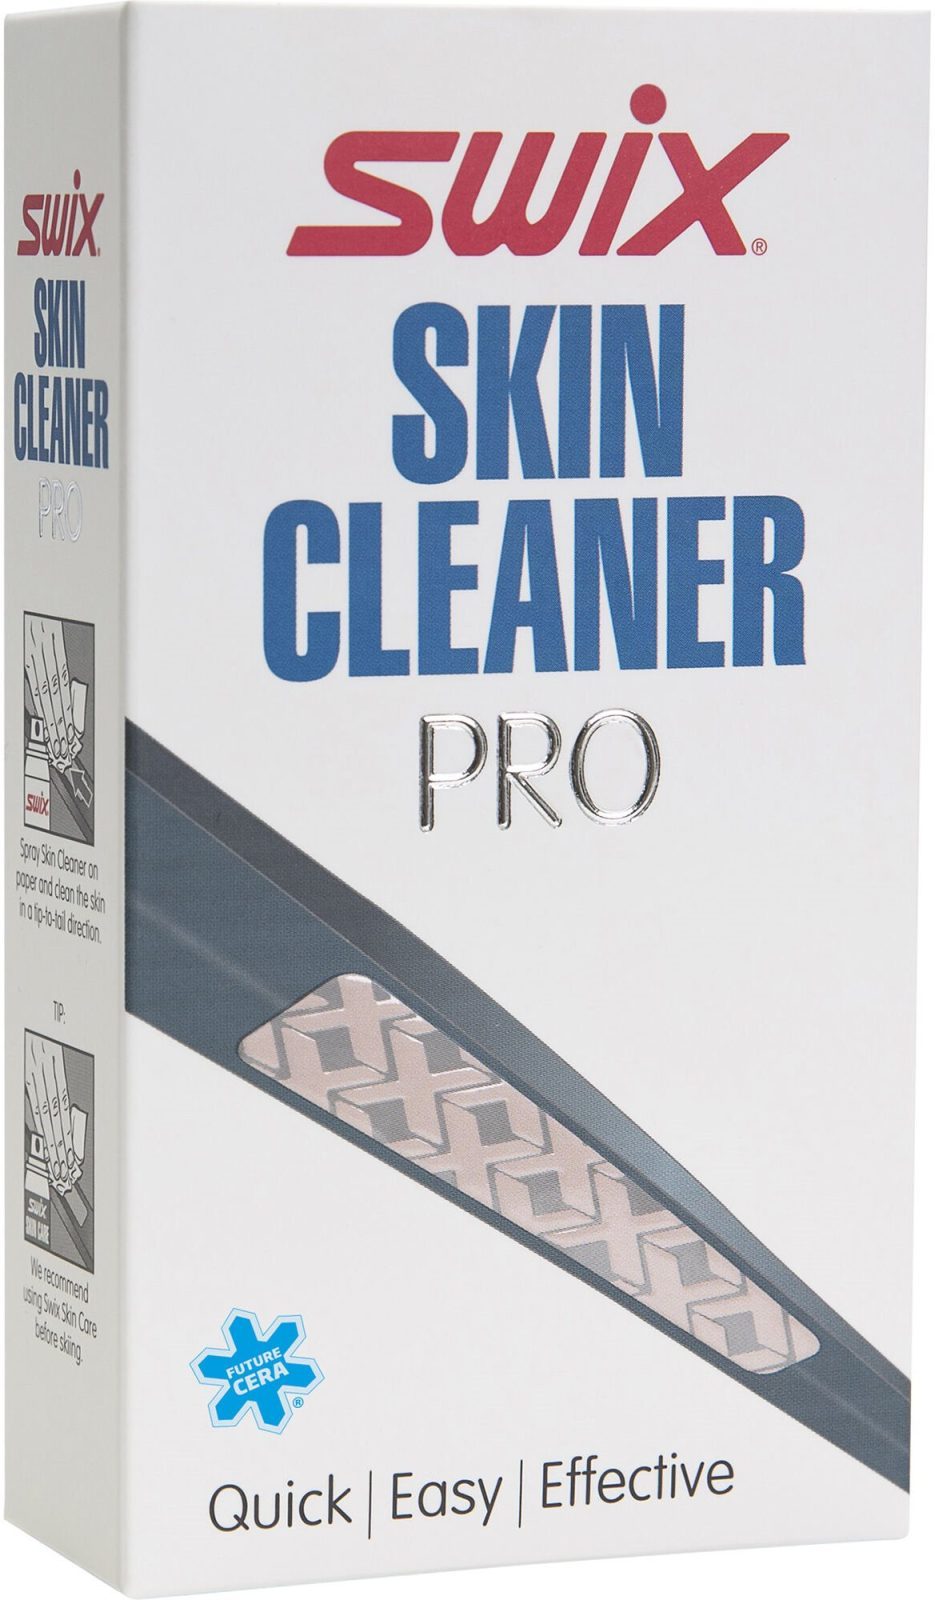 Wax eltávolító Swix N18 Skin Cleaner Pro